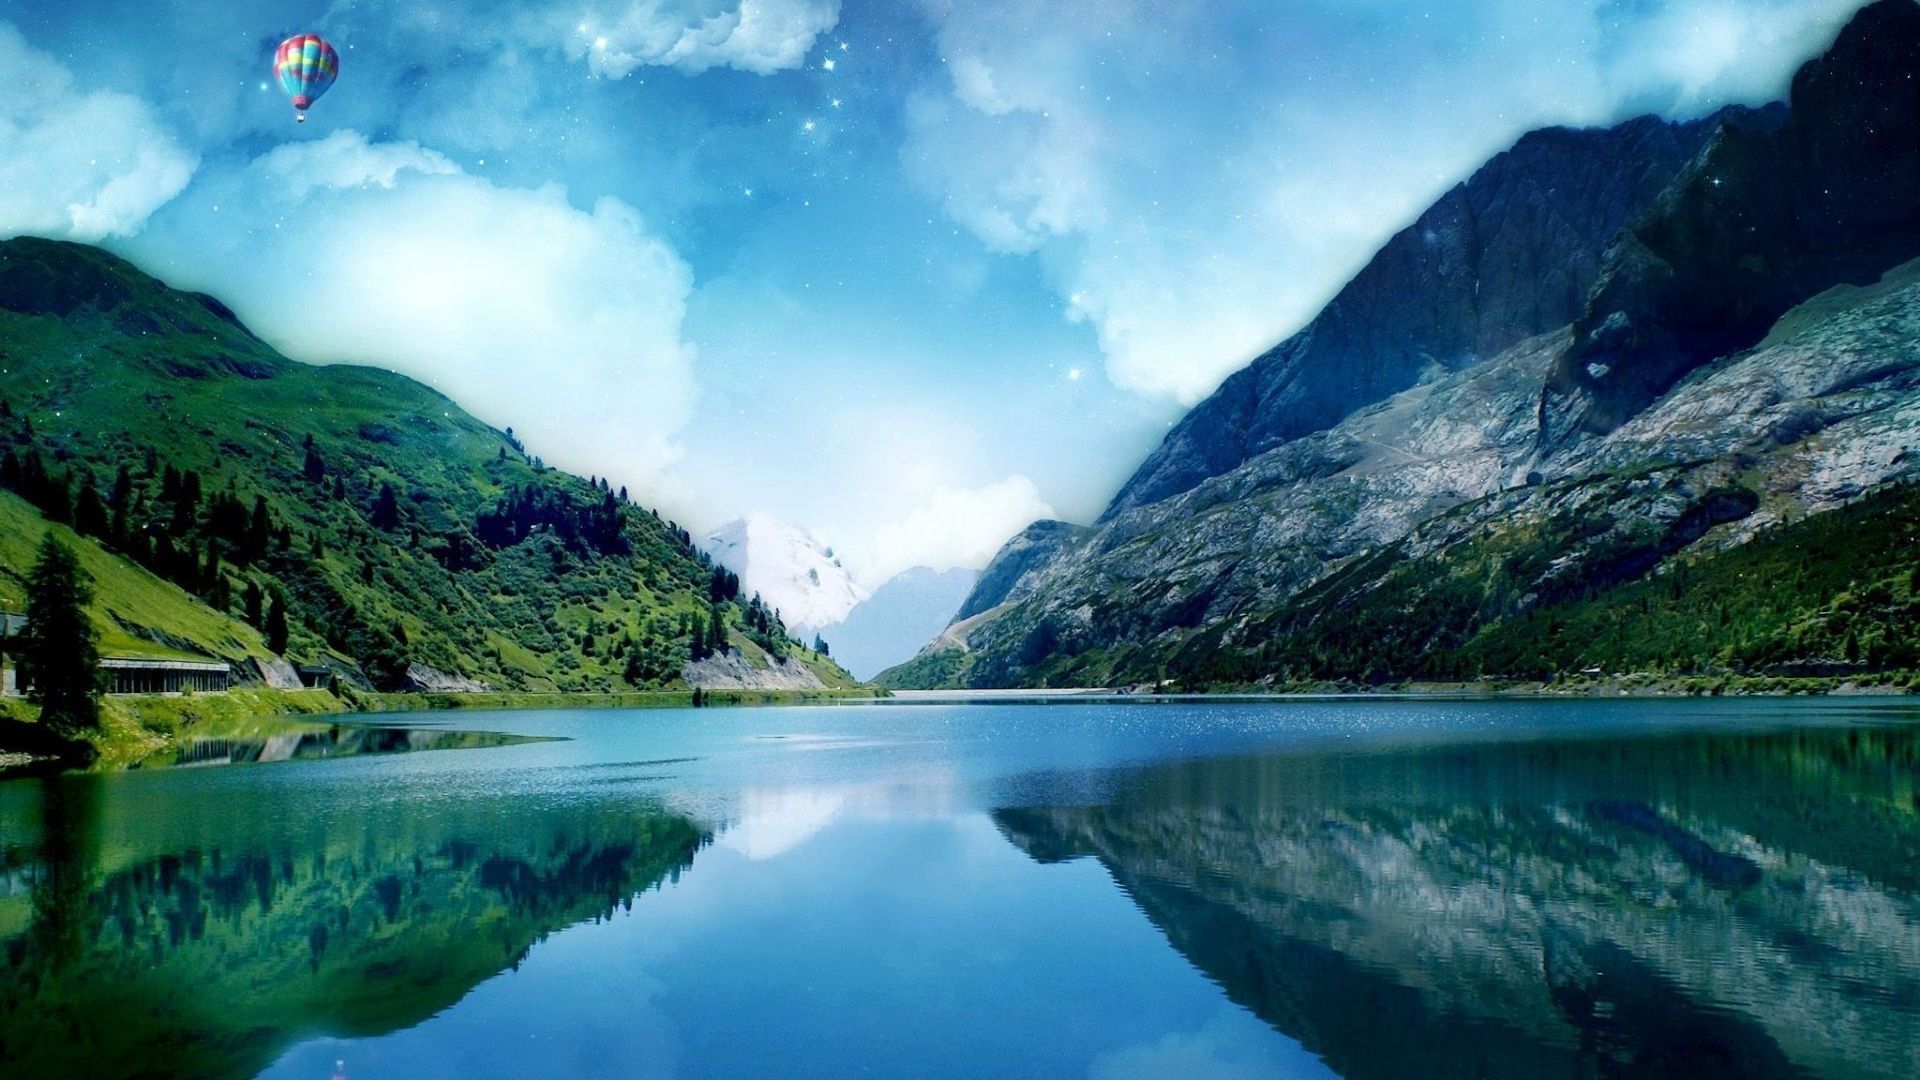 HD wallpaper: 8k ultra hd nature, scenics - nature, mountain, beauty in  nature